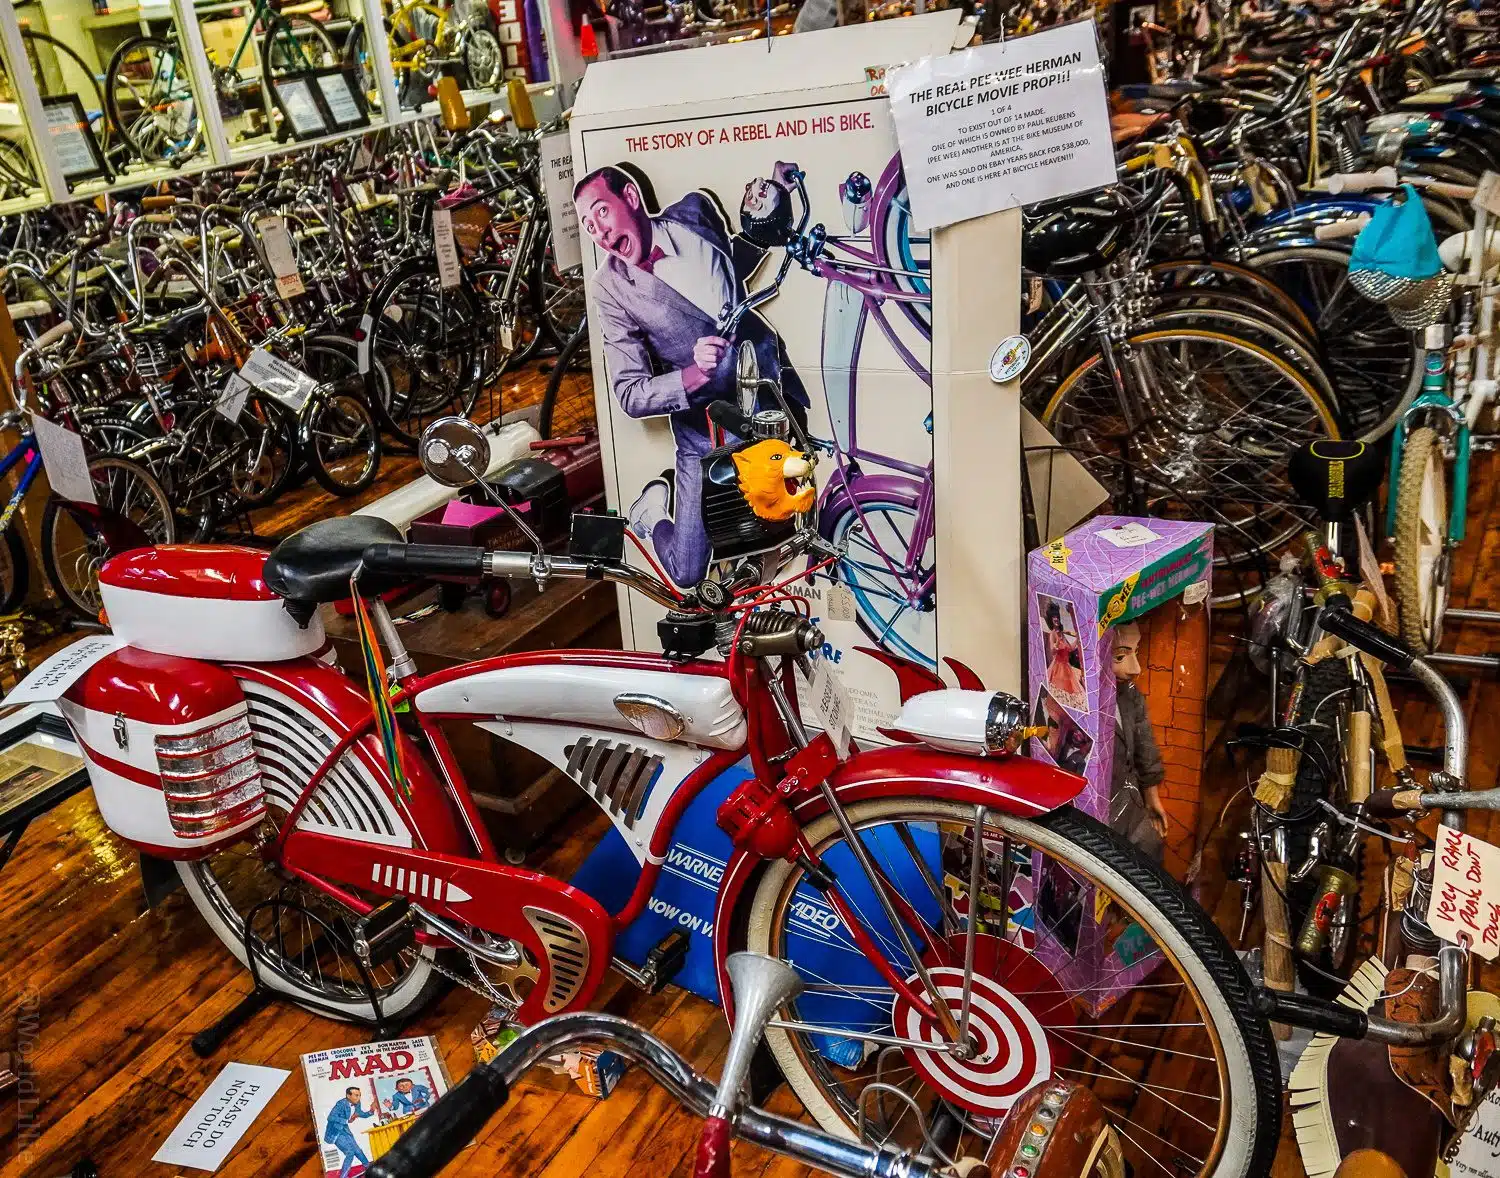 The Pee-wee Herman bike from the movie!